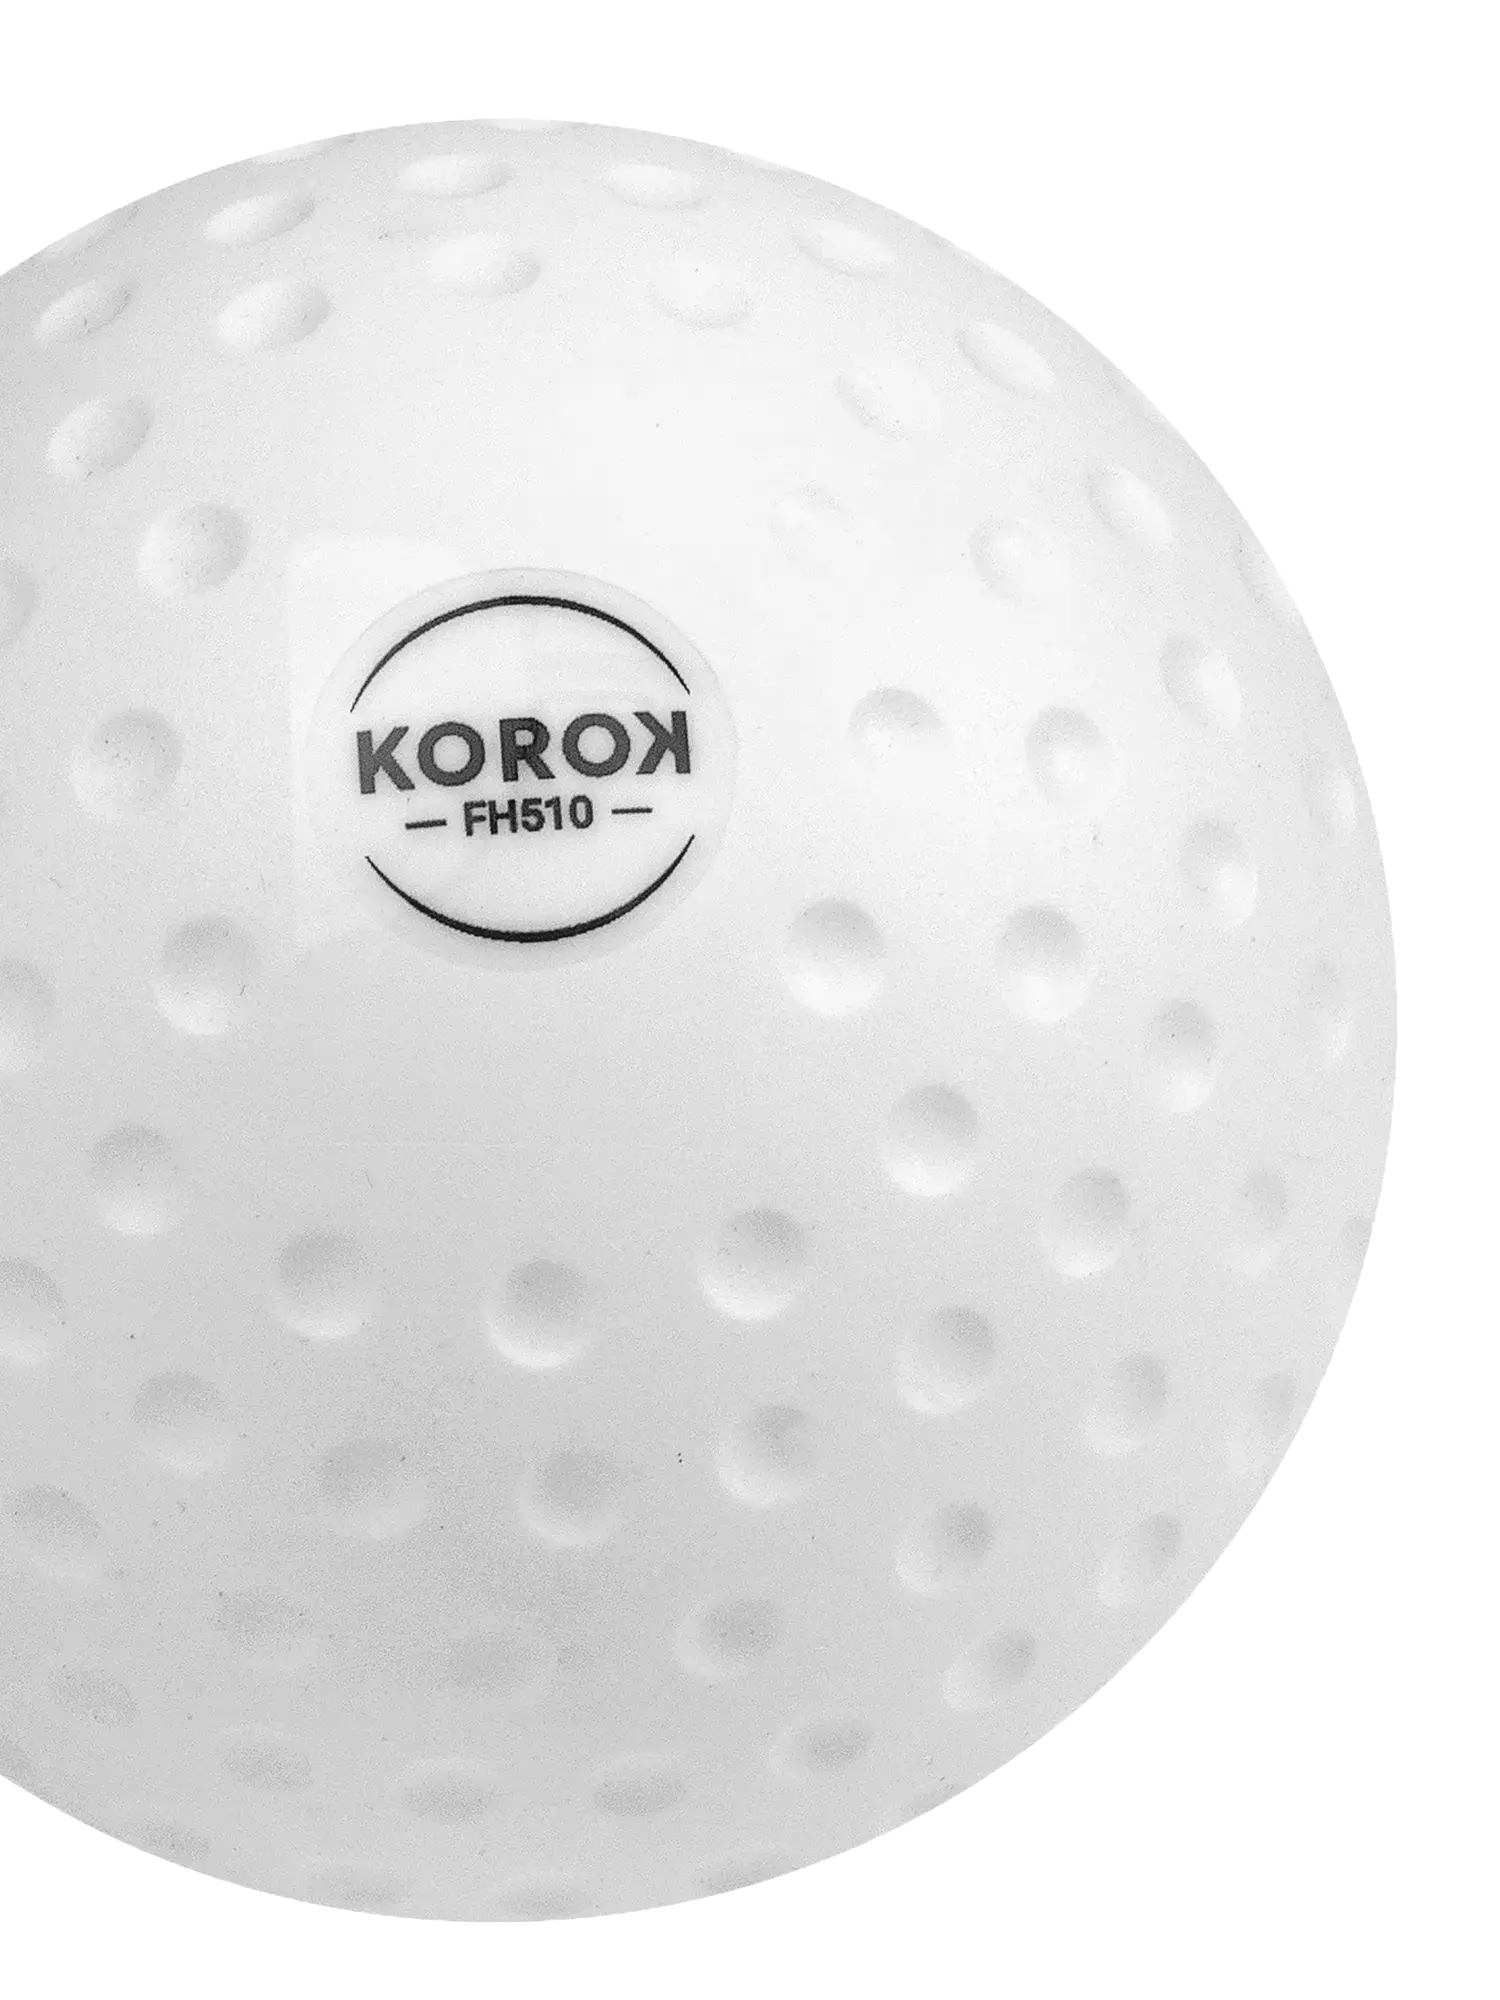 The Korok Ball